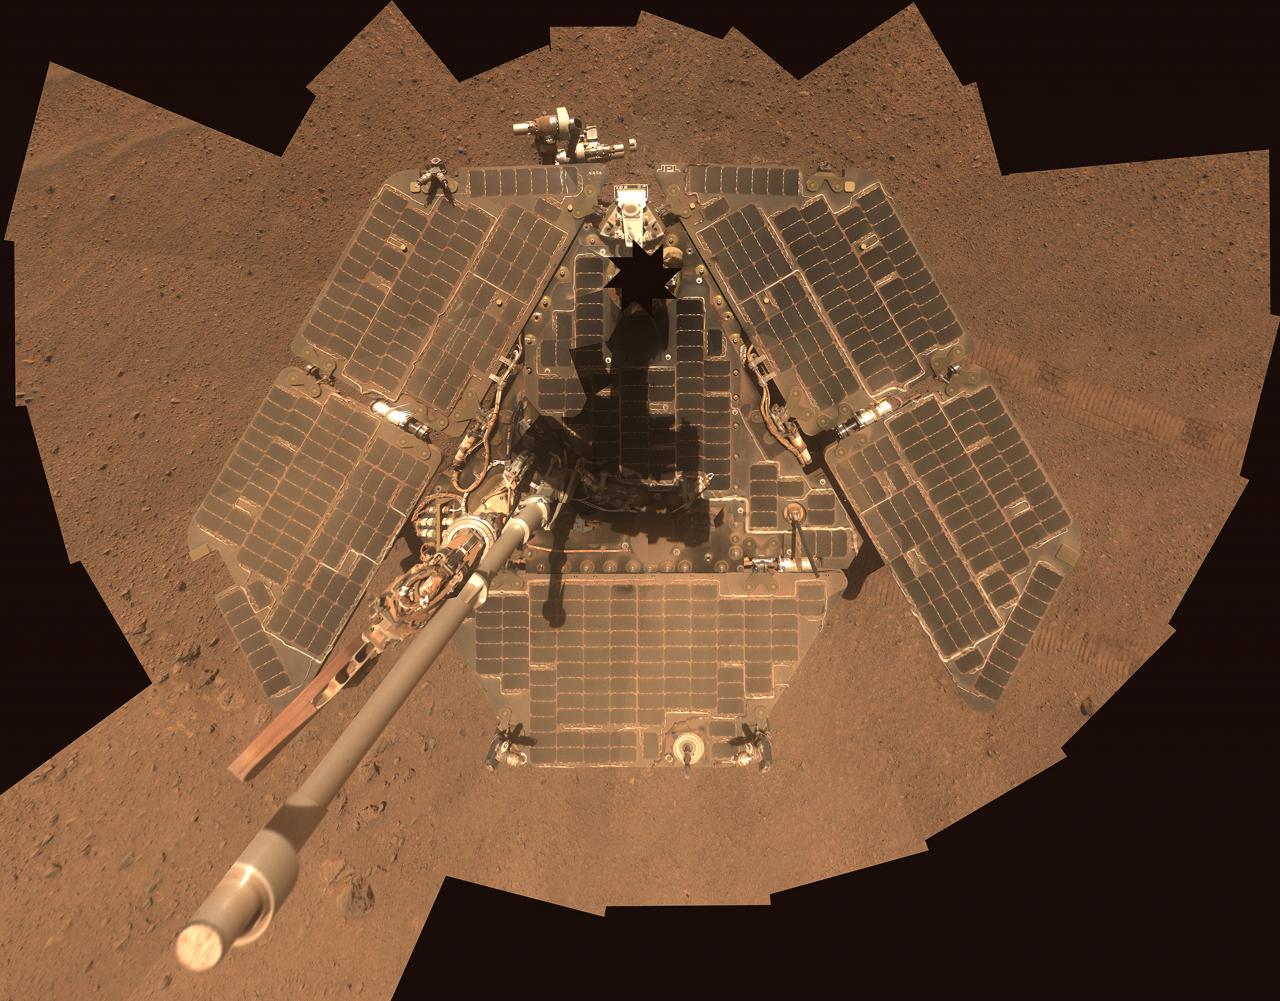 Massive Martian dust storm threatens plucky NASA rover